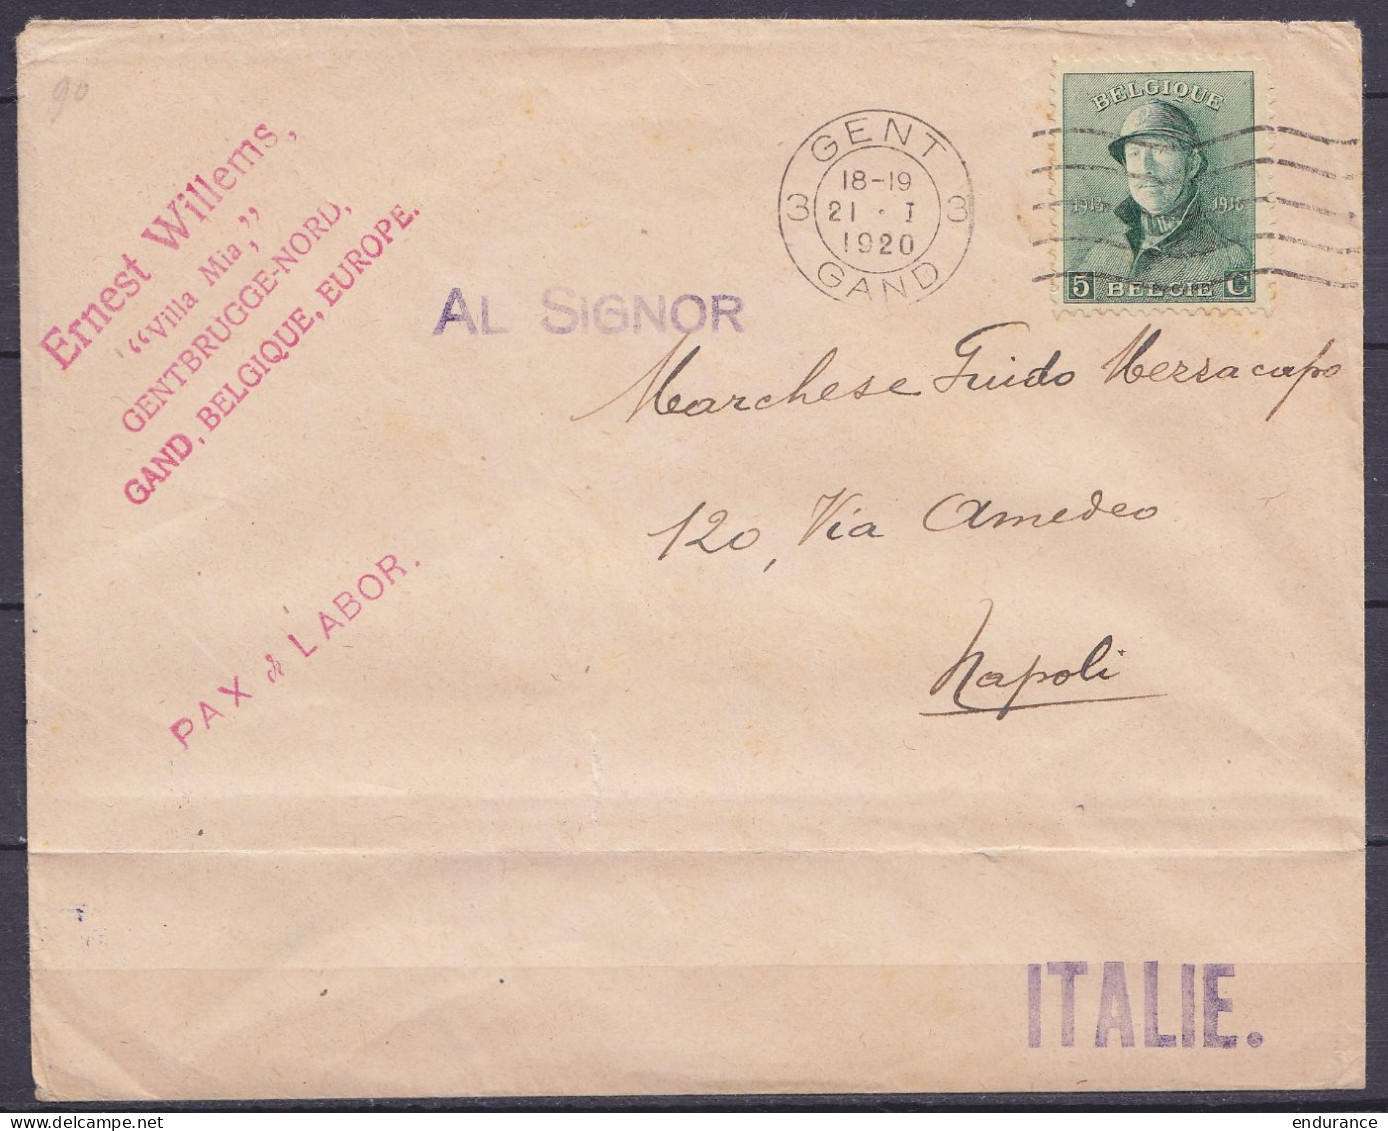 Env. Affr. N°167 (tarif Imprimés) Flam. "GENT 3/12.I 1920/ GAND 3" Pour NAPOLI (Naples) Italie - 1919-1920 Roi Casqué